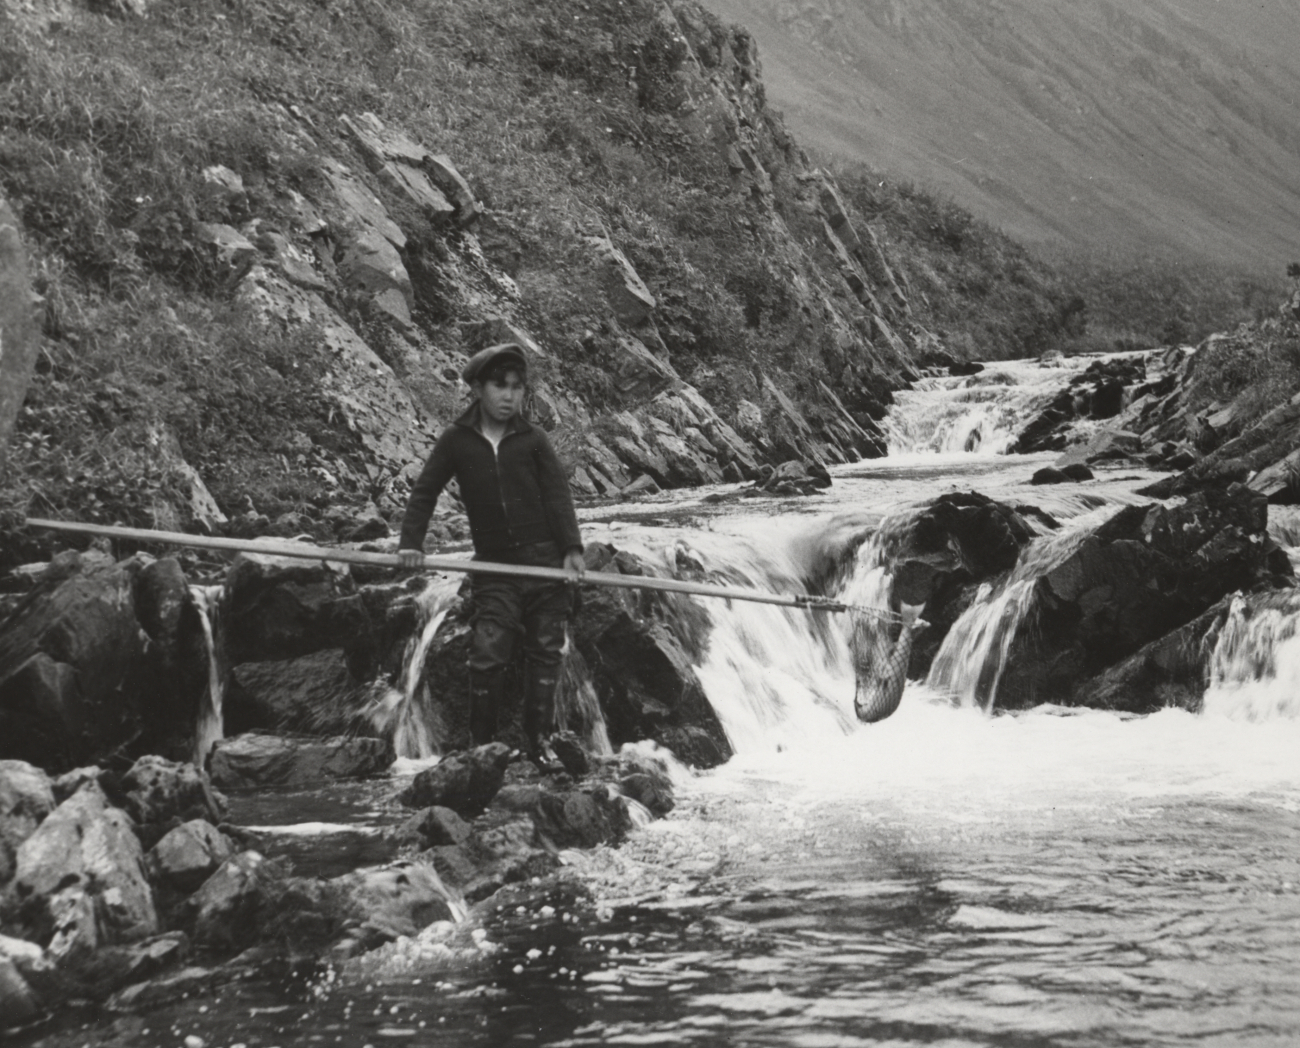 Mike Houdikoff's son netting sockeye salmon on creek above village